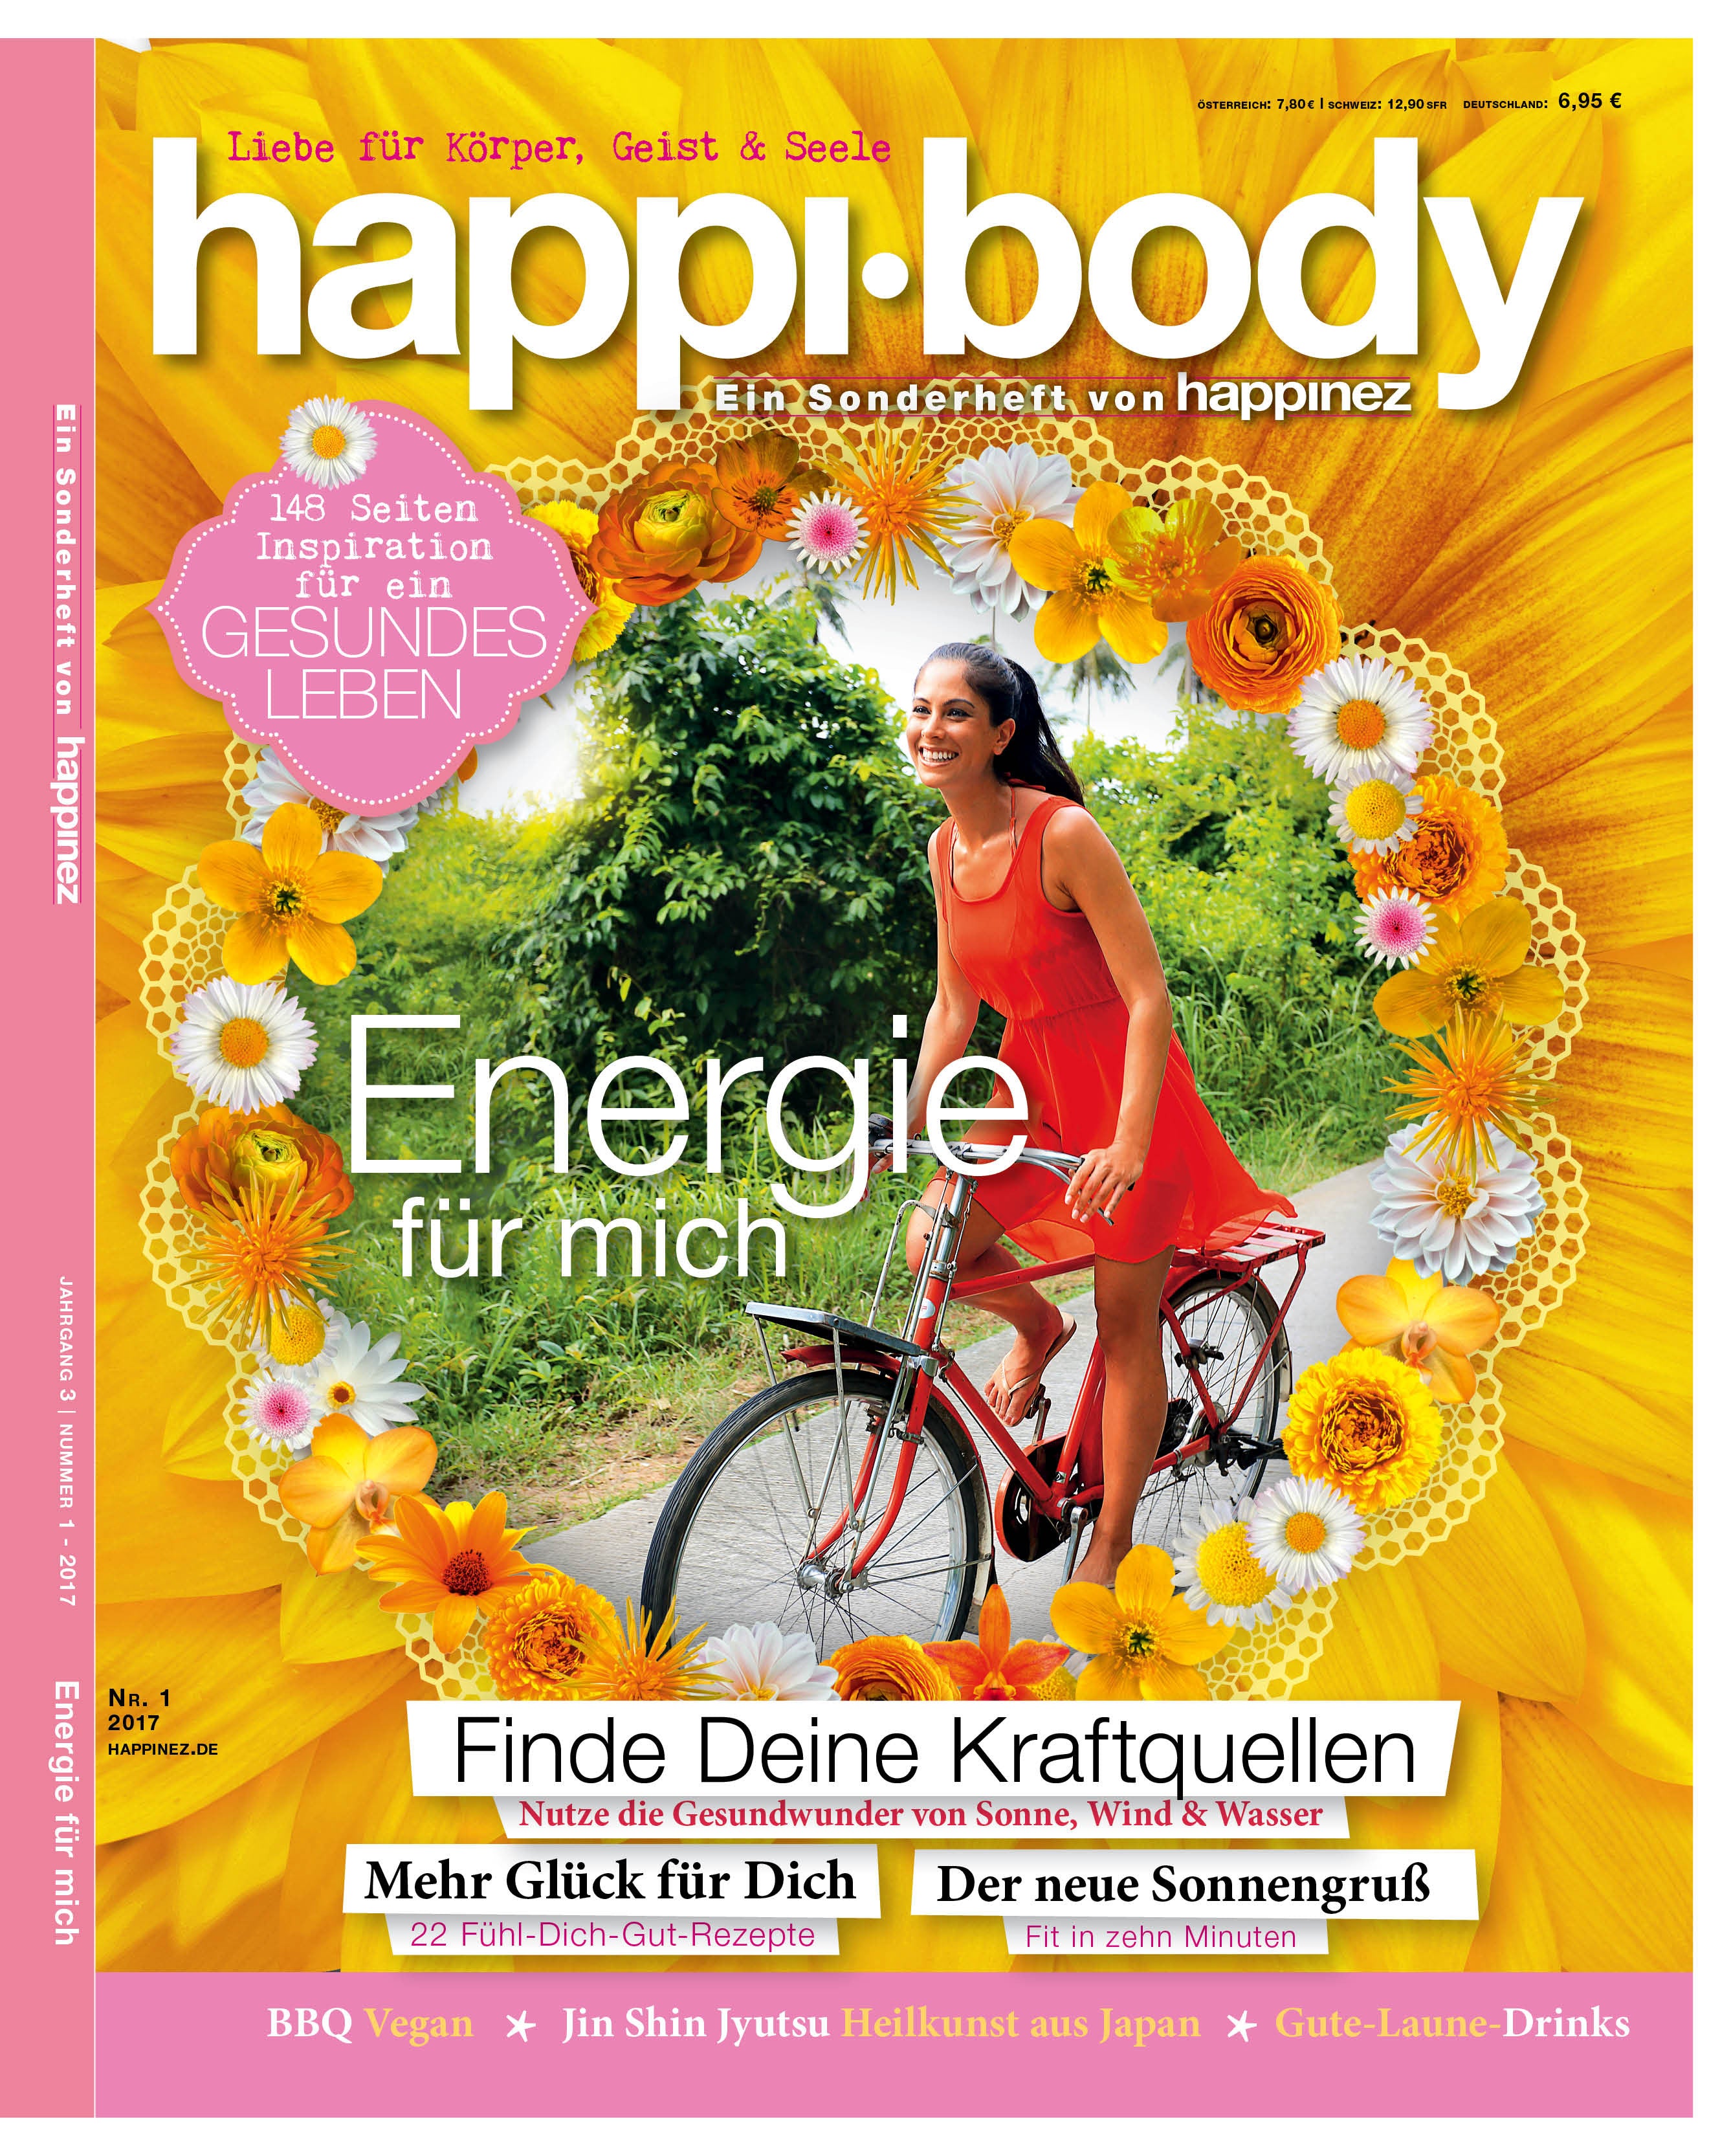 ABURY featured in the Happi.body Magazine